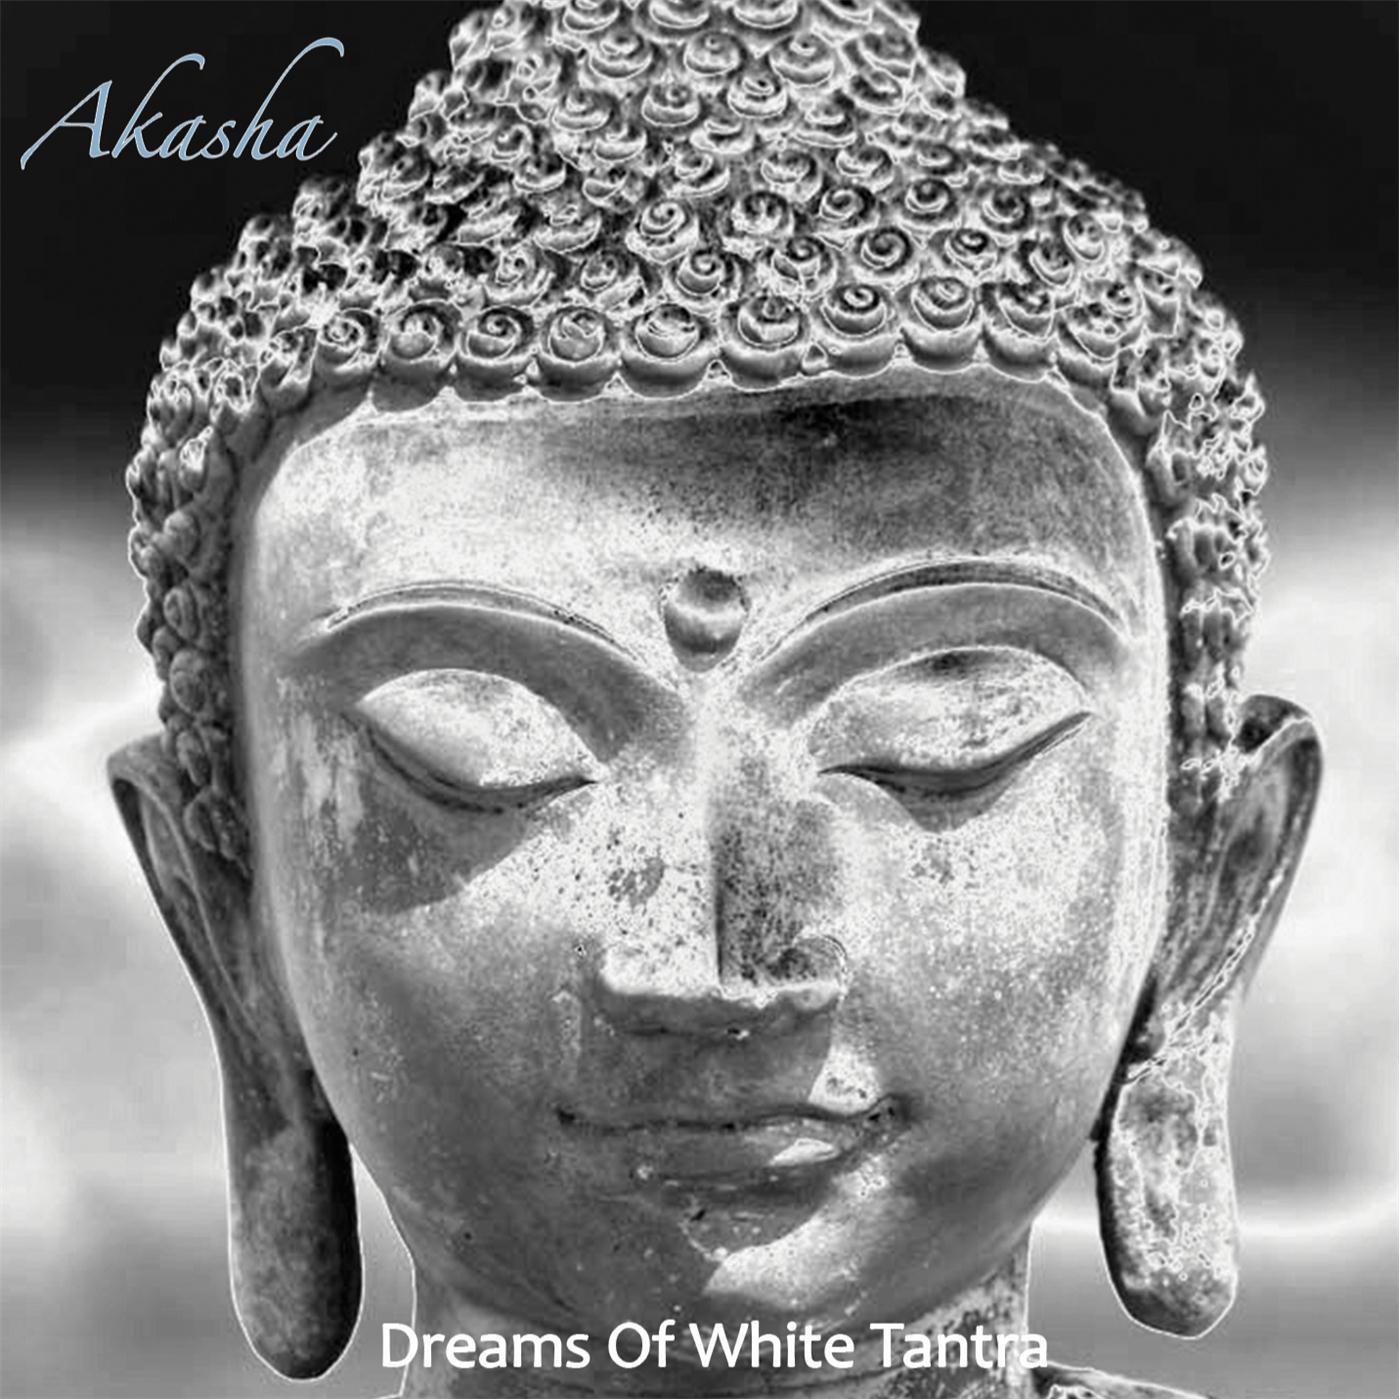 Dreams of White Tantra